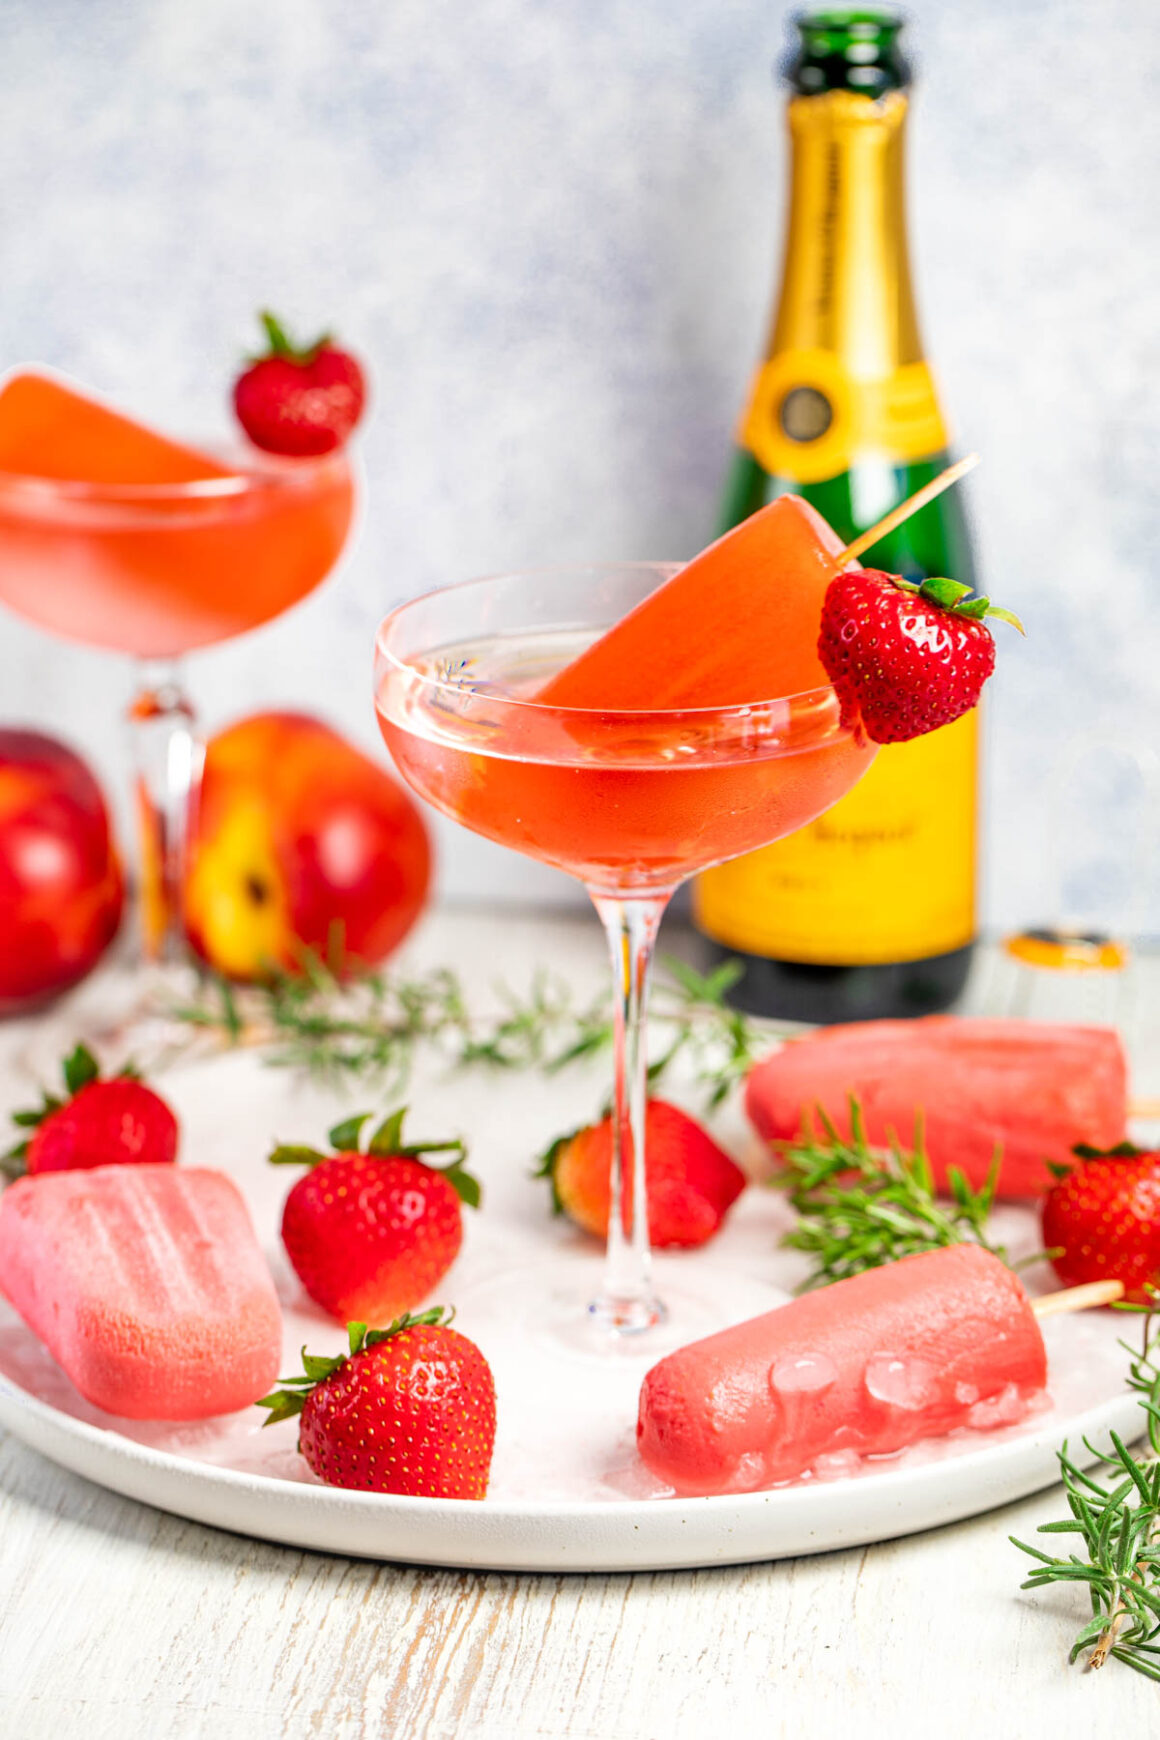 Strawberry Champagne Popsicle Recipe